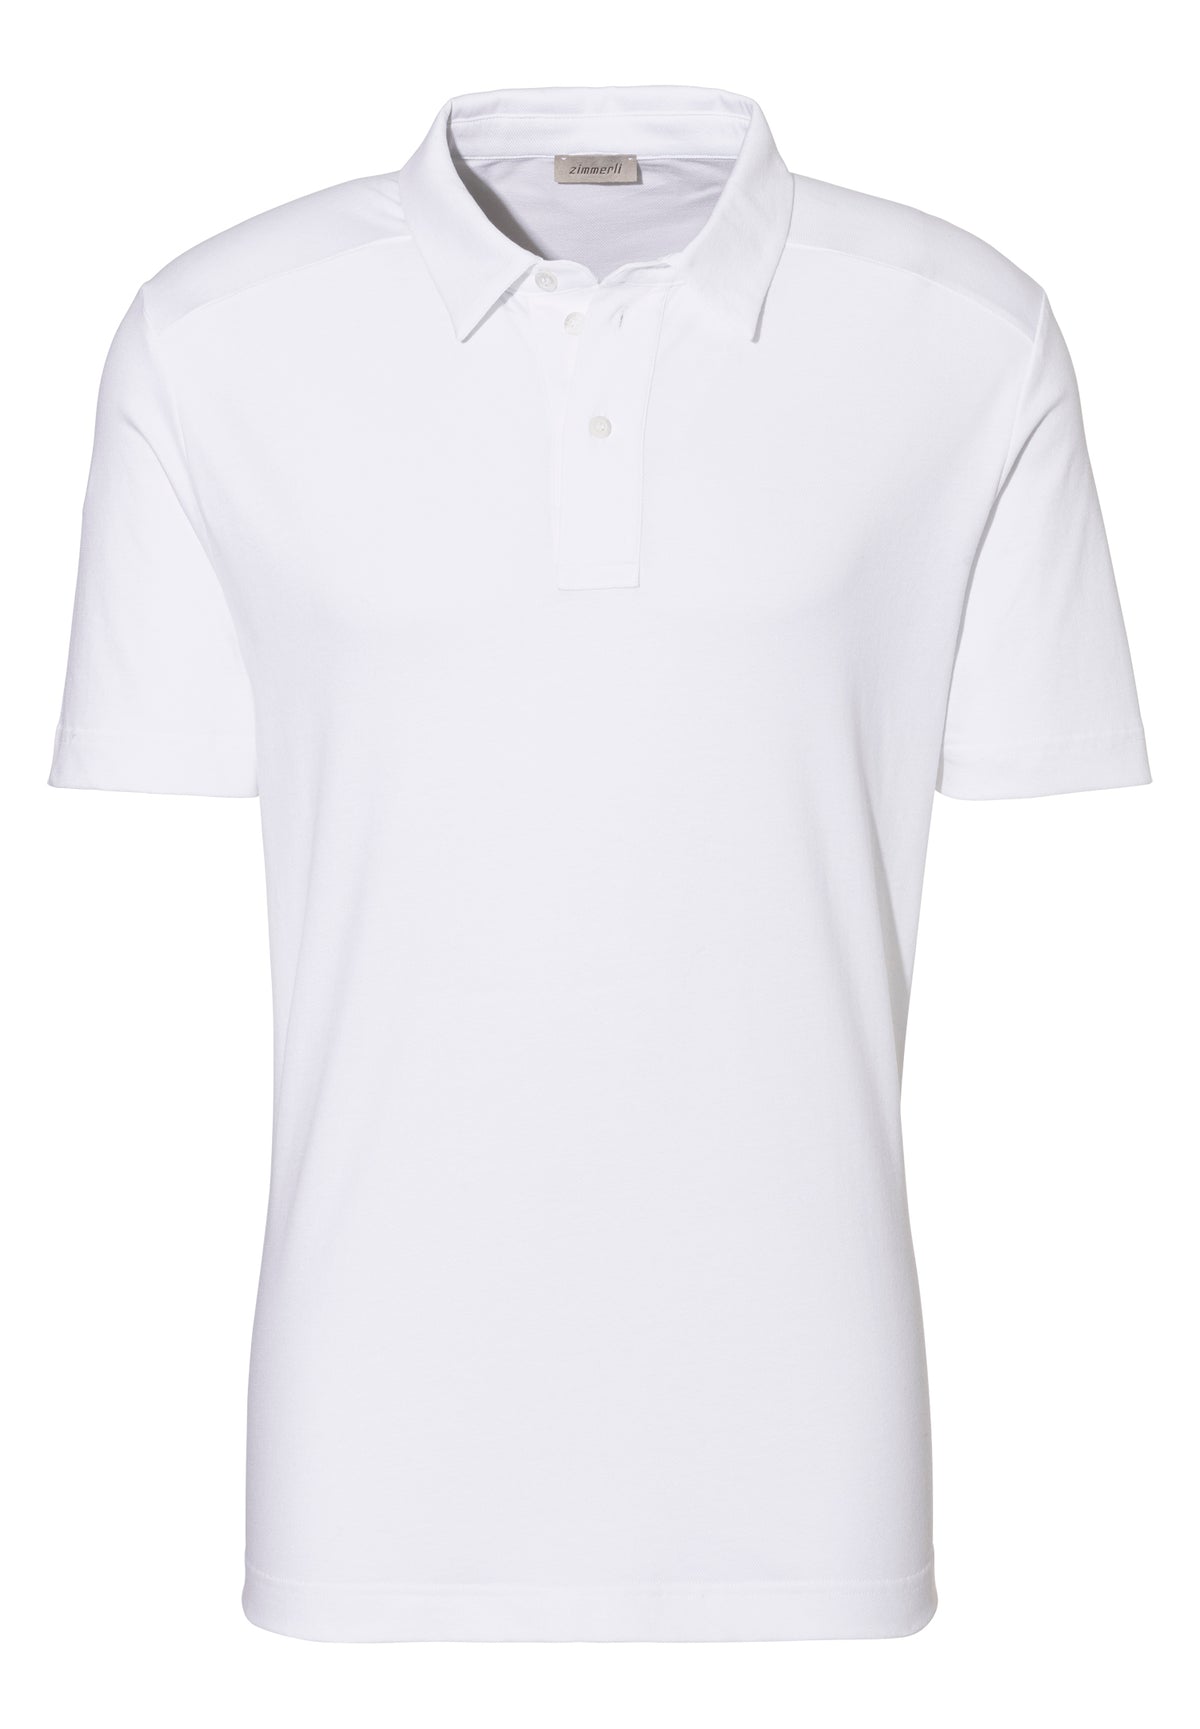 Piqué Lounge | Poloshirt kurzarm - white